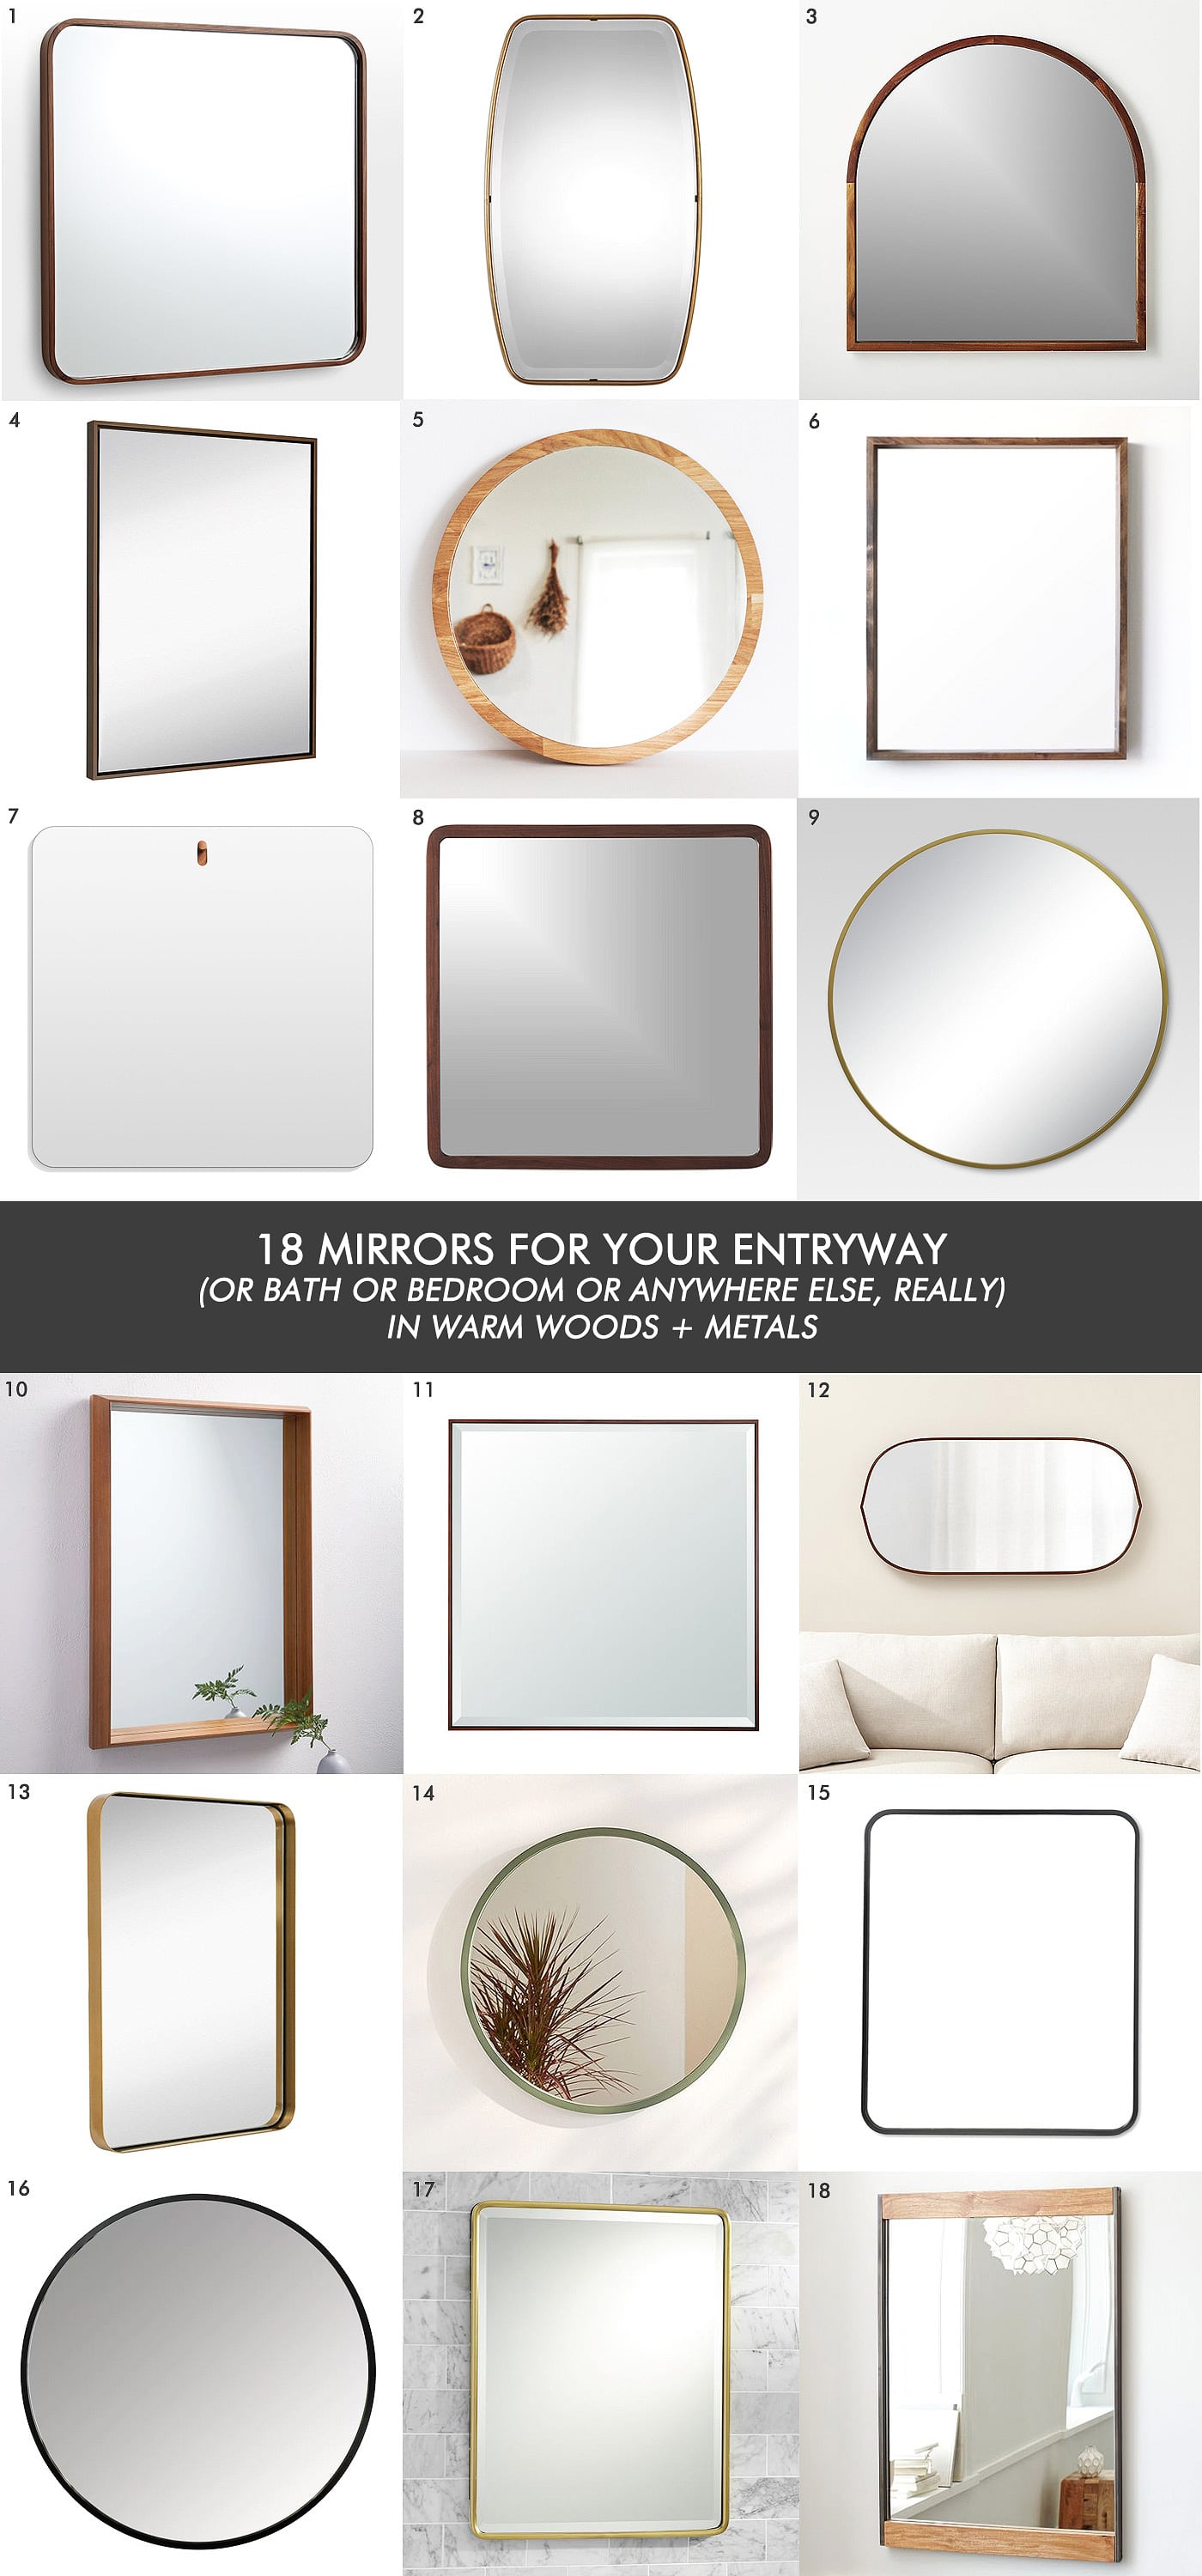 18 mirrors for your entryway, bathroom or bedroom / sleek + simple / warm woods + metals / via Yellow Brick Home